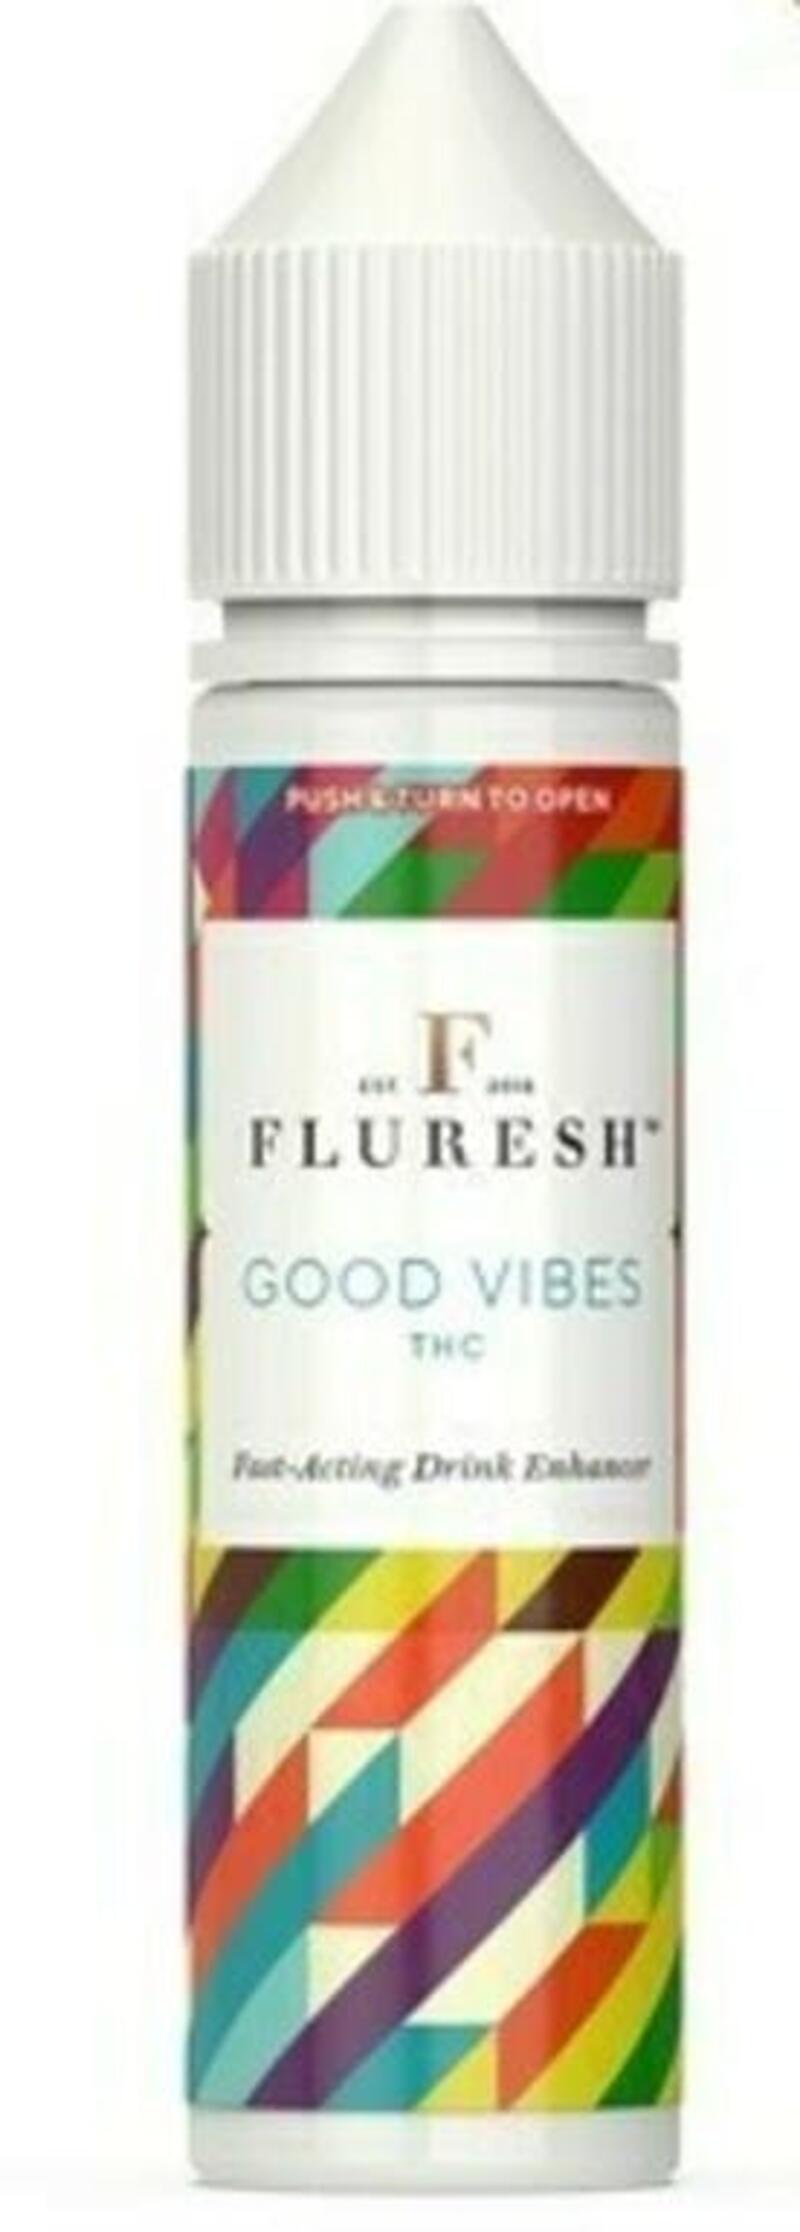 Fluresh - 100mg Good Vibes Drink Enhancer